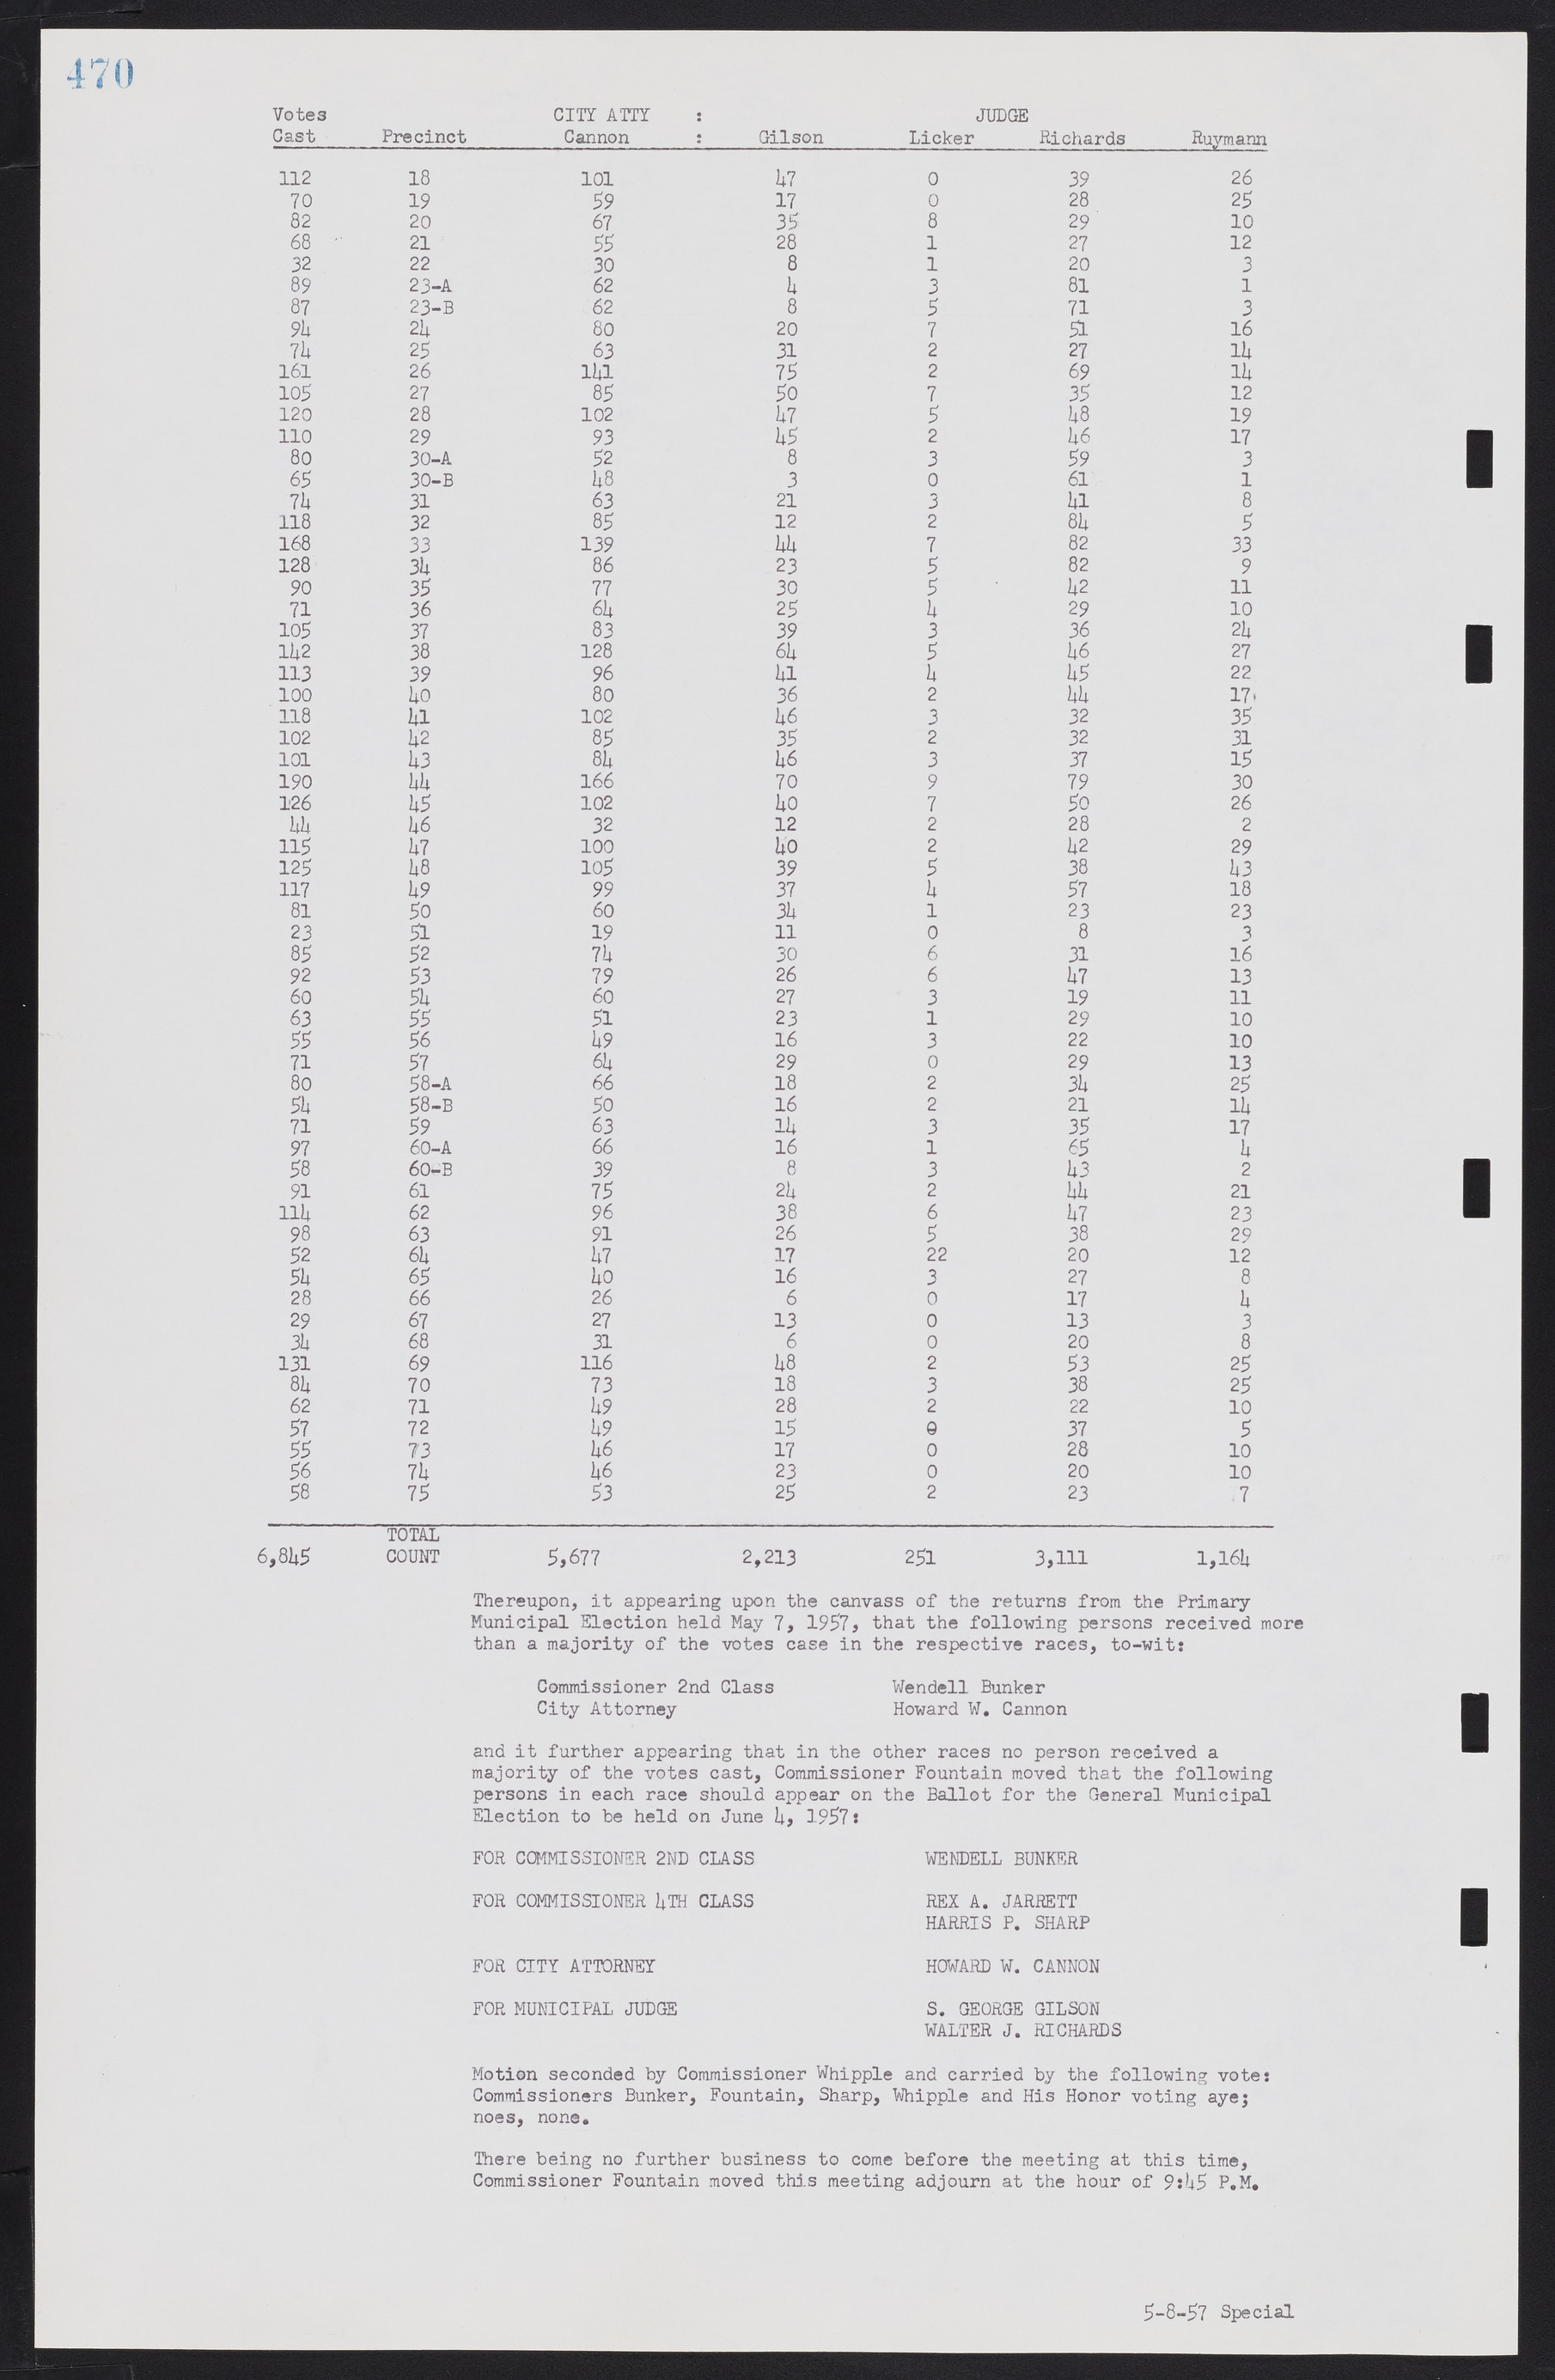 Las Vegas City Commission Minutes, September 21, 1955 to November 20, 1957, lvc000010-490